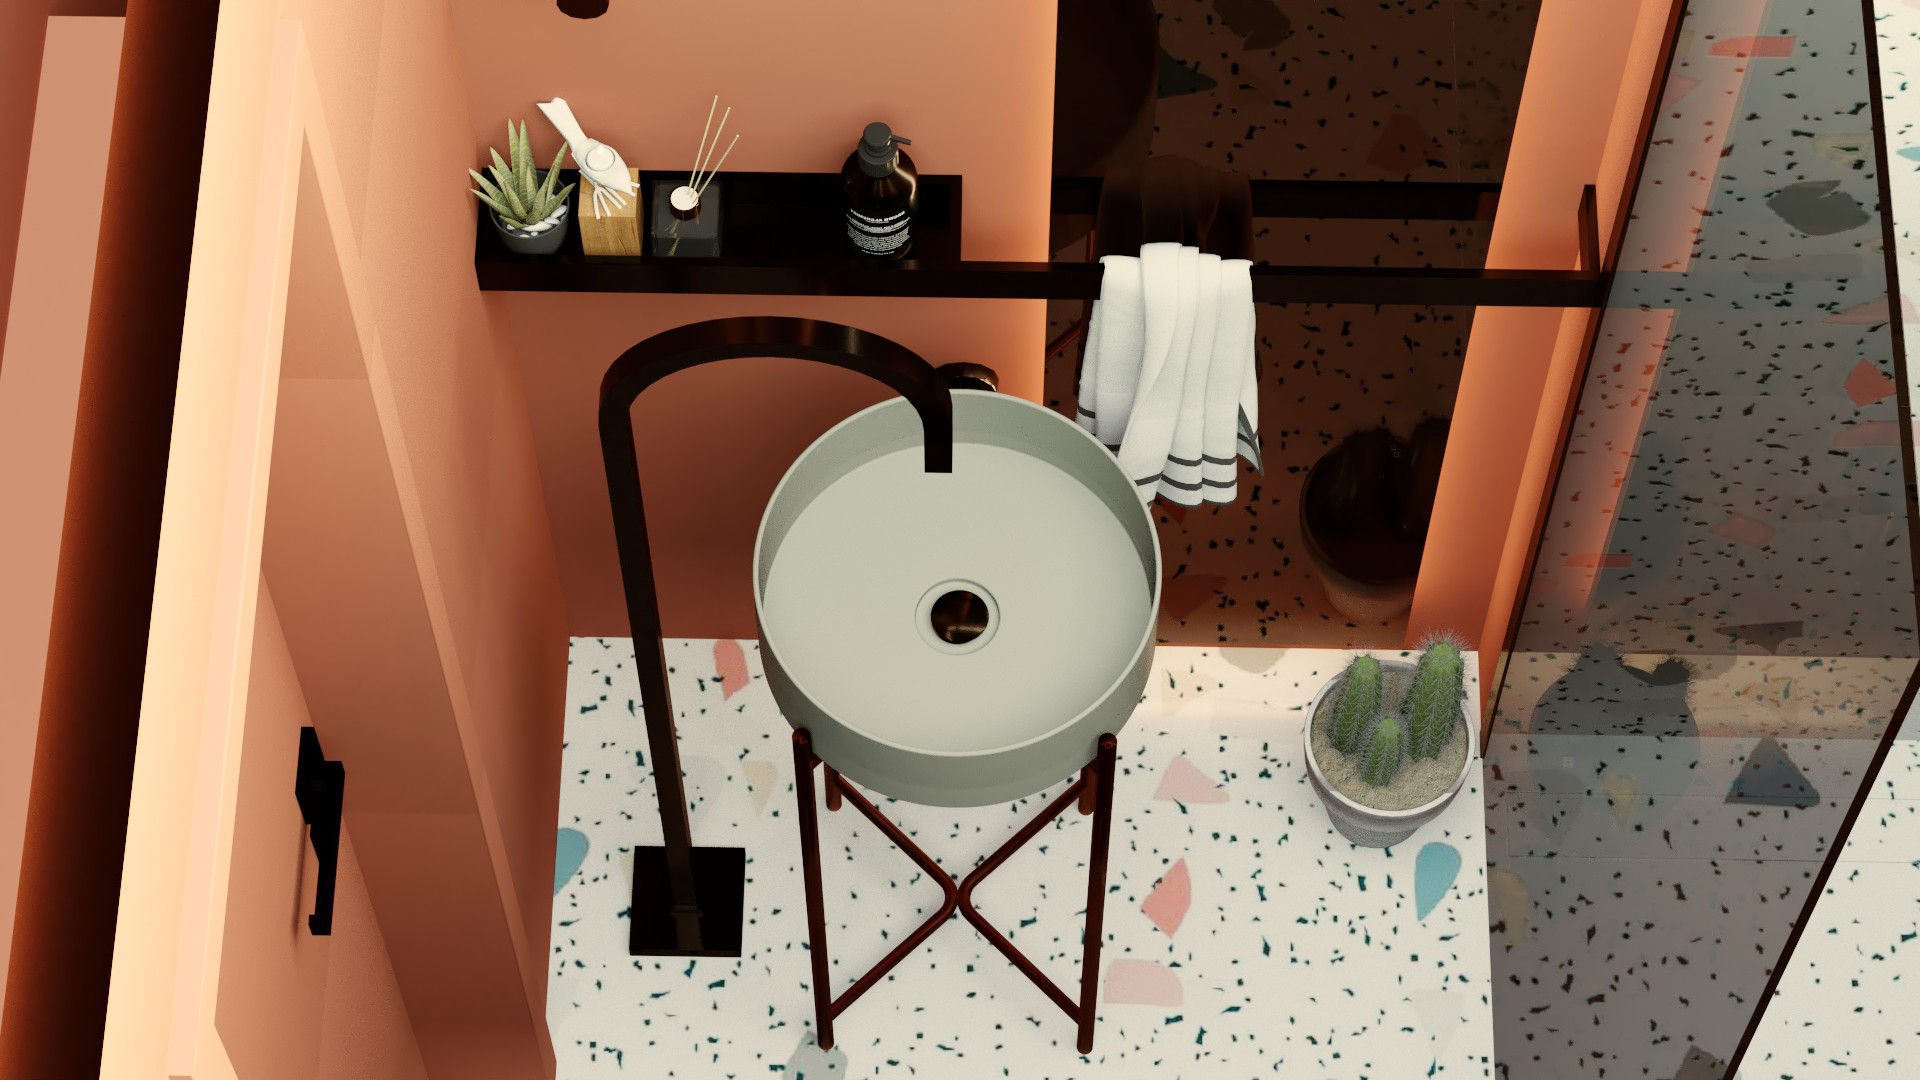 Casa de banho minimalista, Letícia Gurgel design de interiores Letícia Gurgel design de interiores ห้องน้ำ